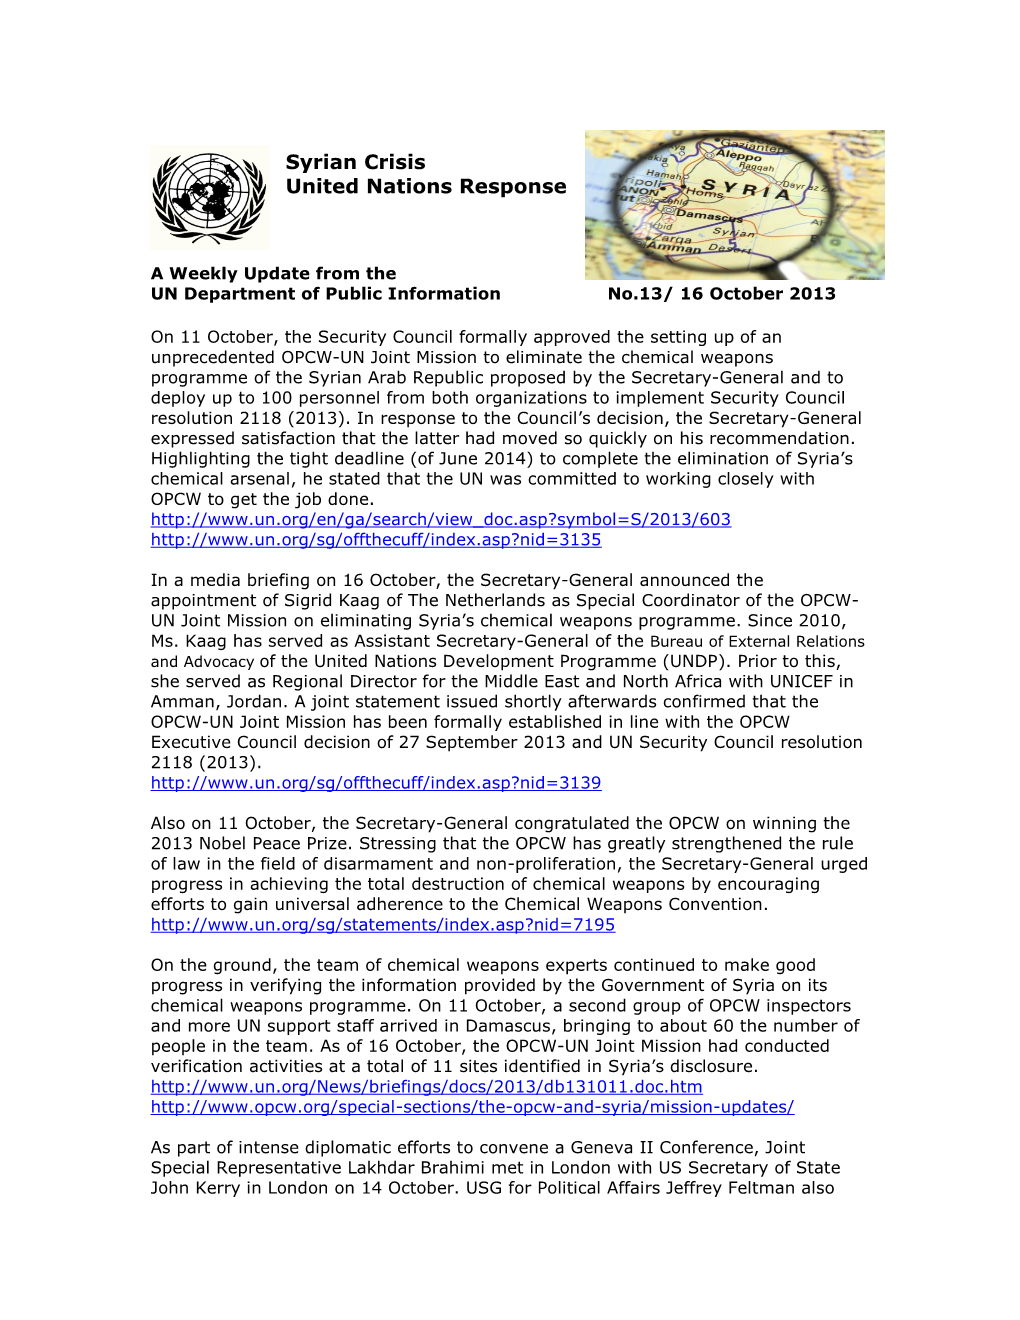 Syrian Crisis United Nations Response